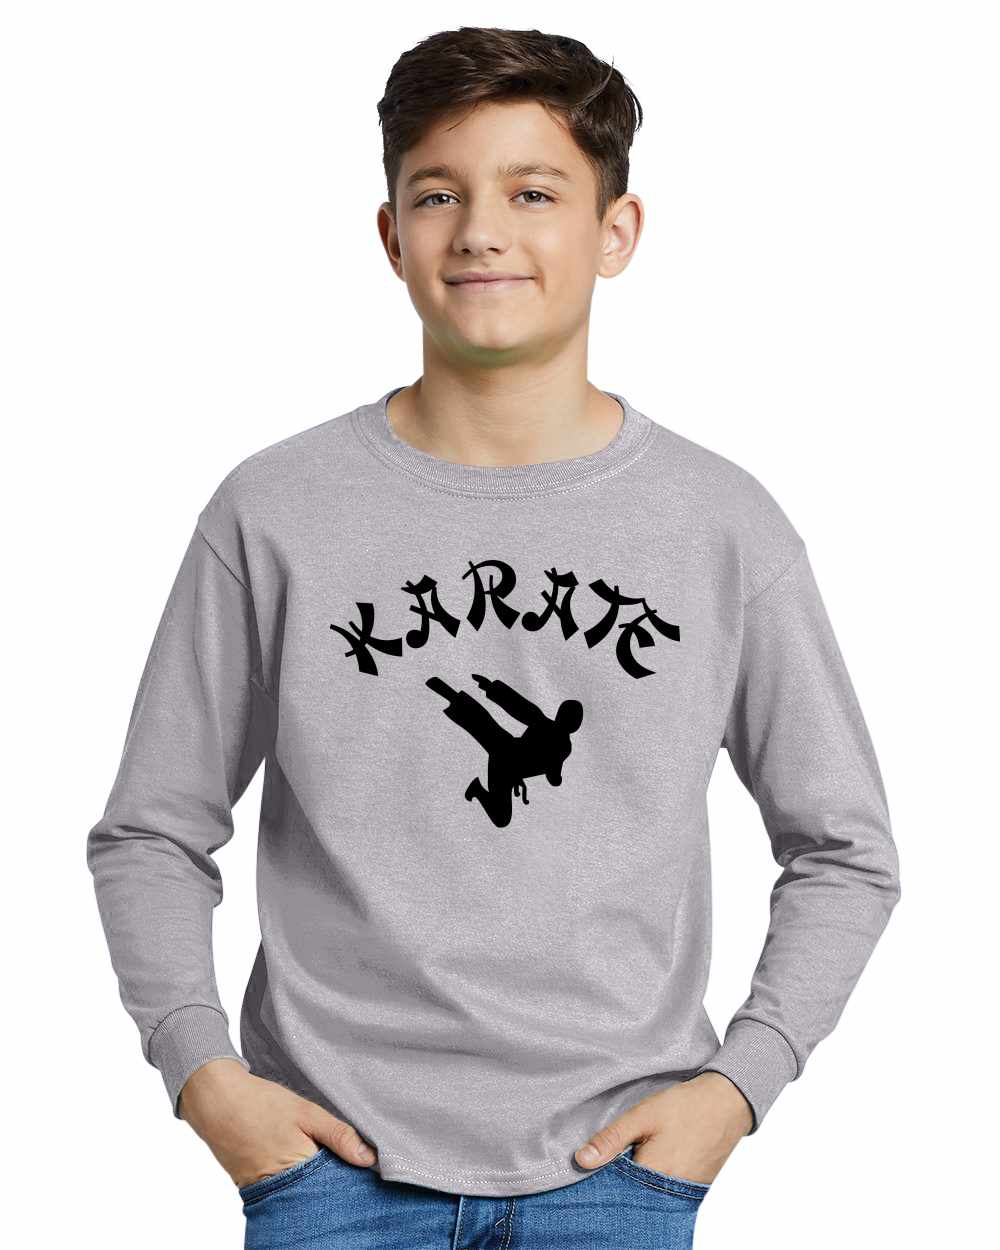 KARATE on Youth Long Sleeve Shirt (#744-203)